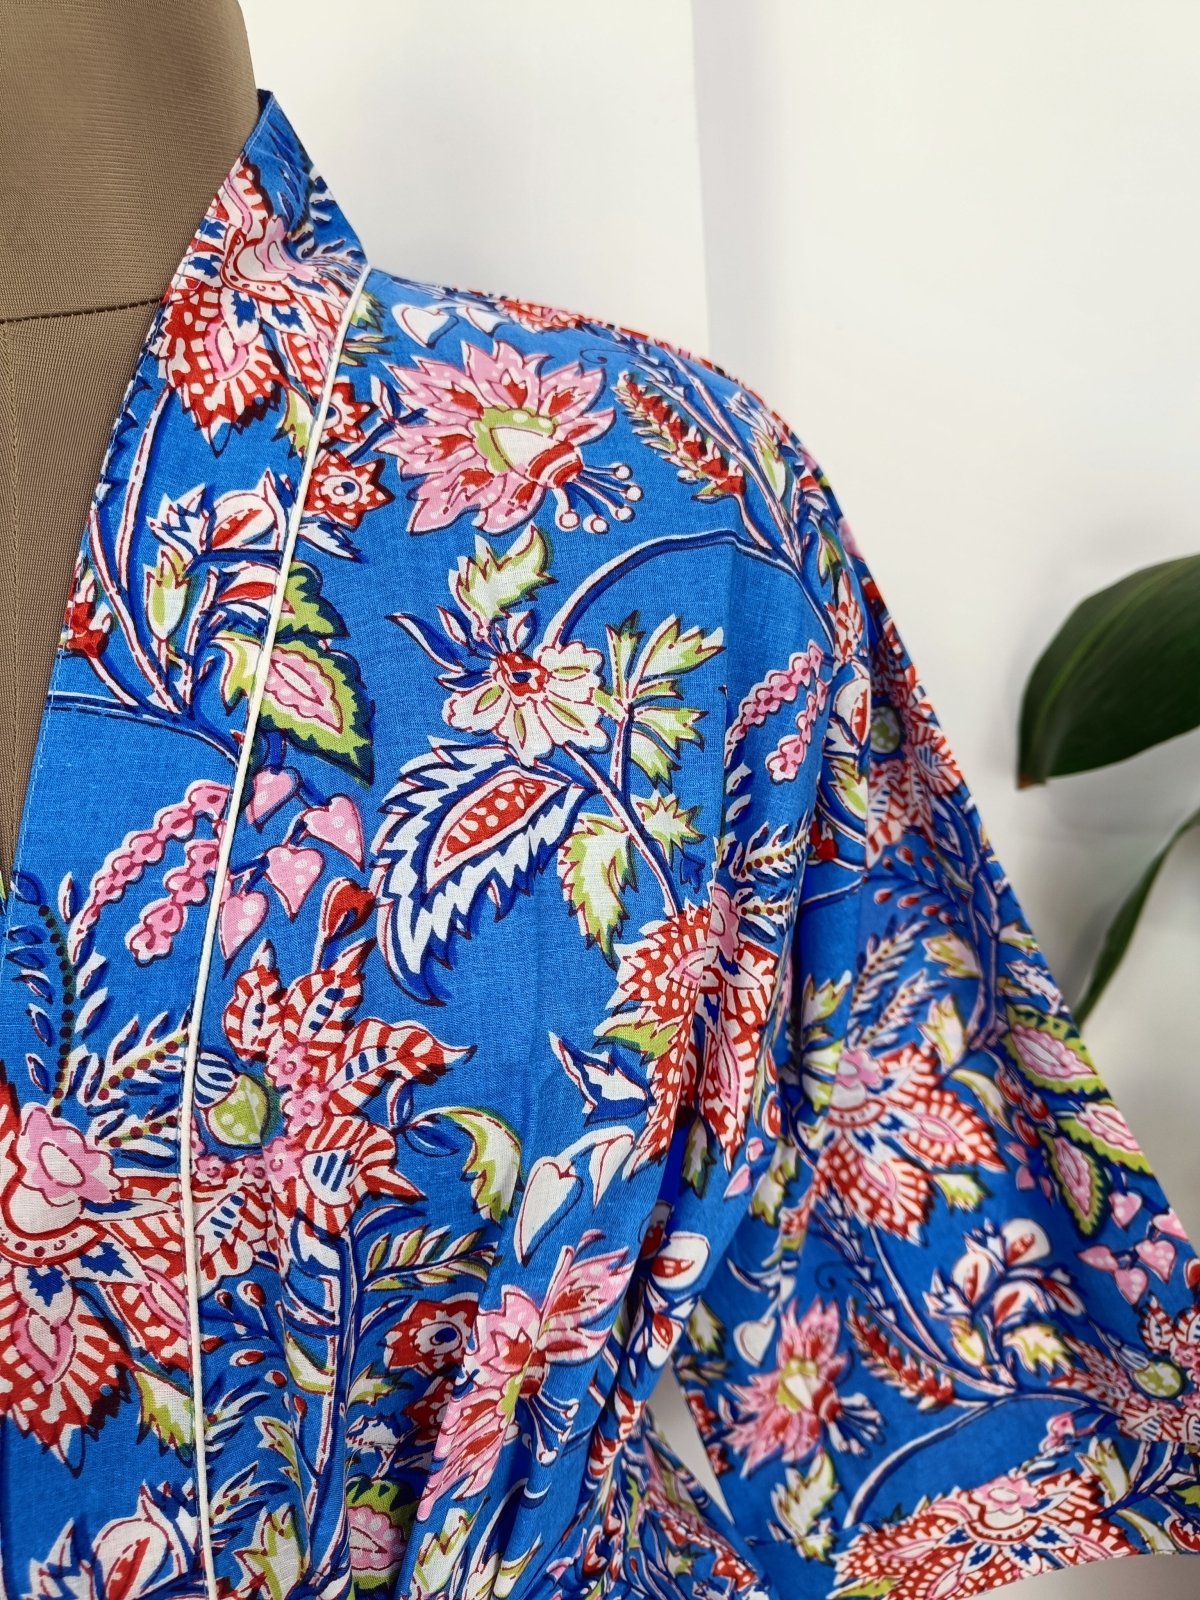 Boho Cotton Kimono House Robe Indian Handprinted Botanical Patter | Lightweight Summer Luxury Beach Holidays Yacht Cover Up Stunning Dress - The Eastern Loom